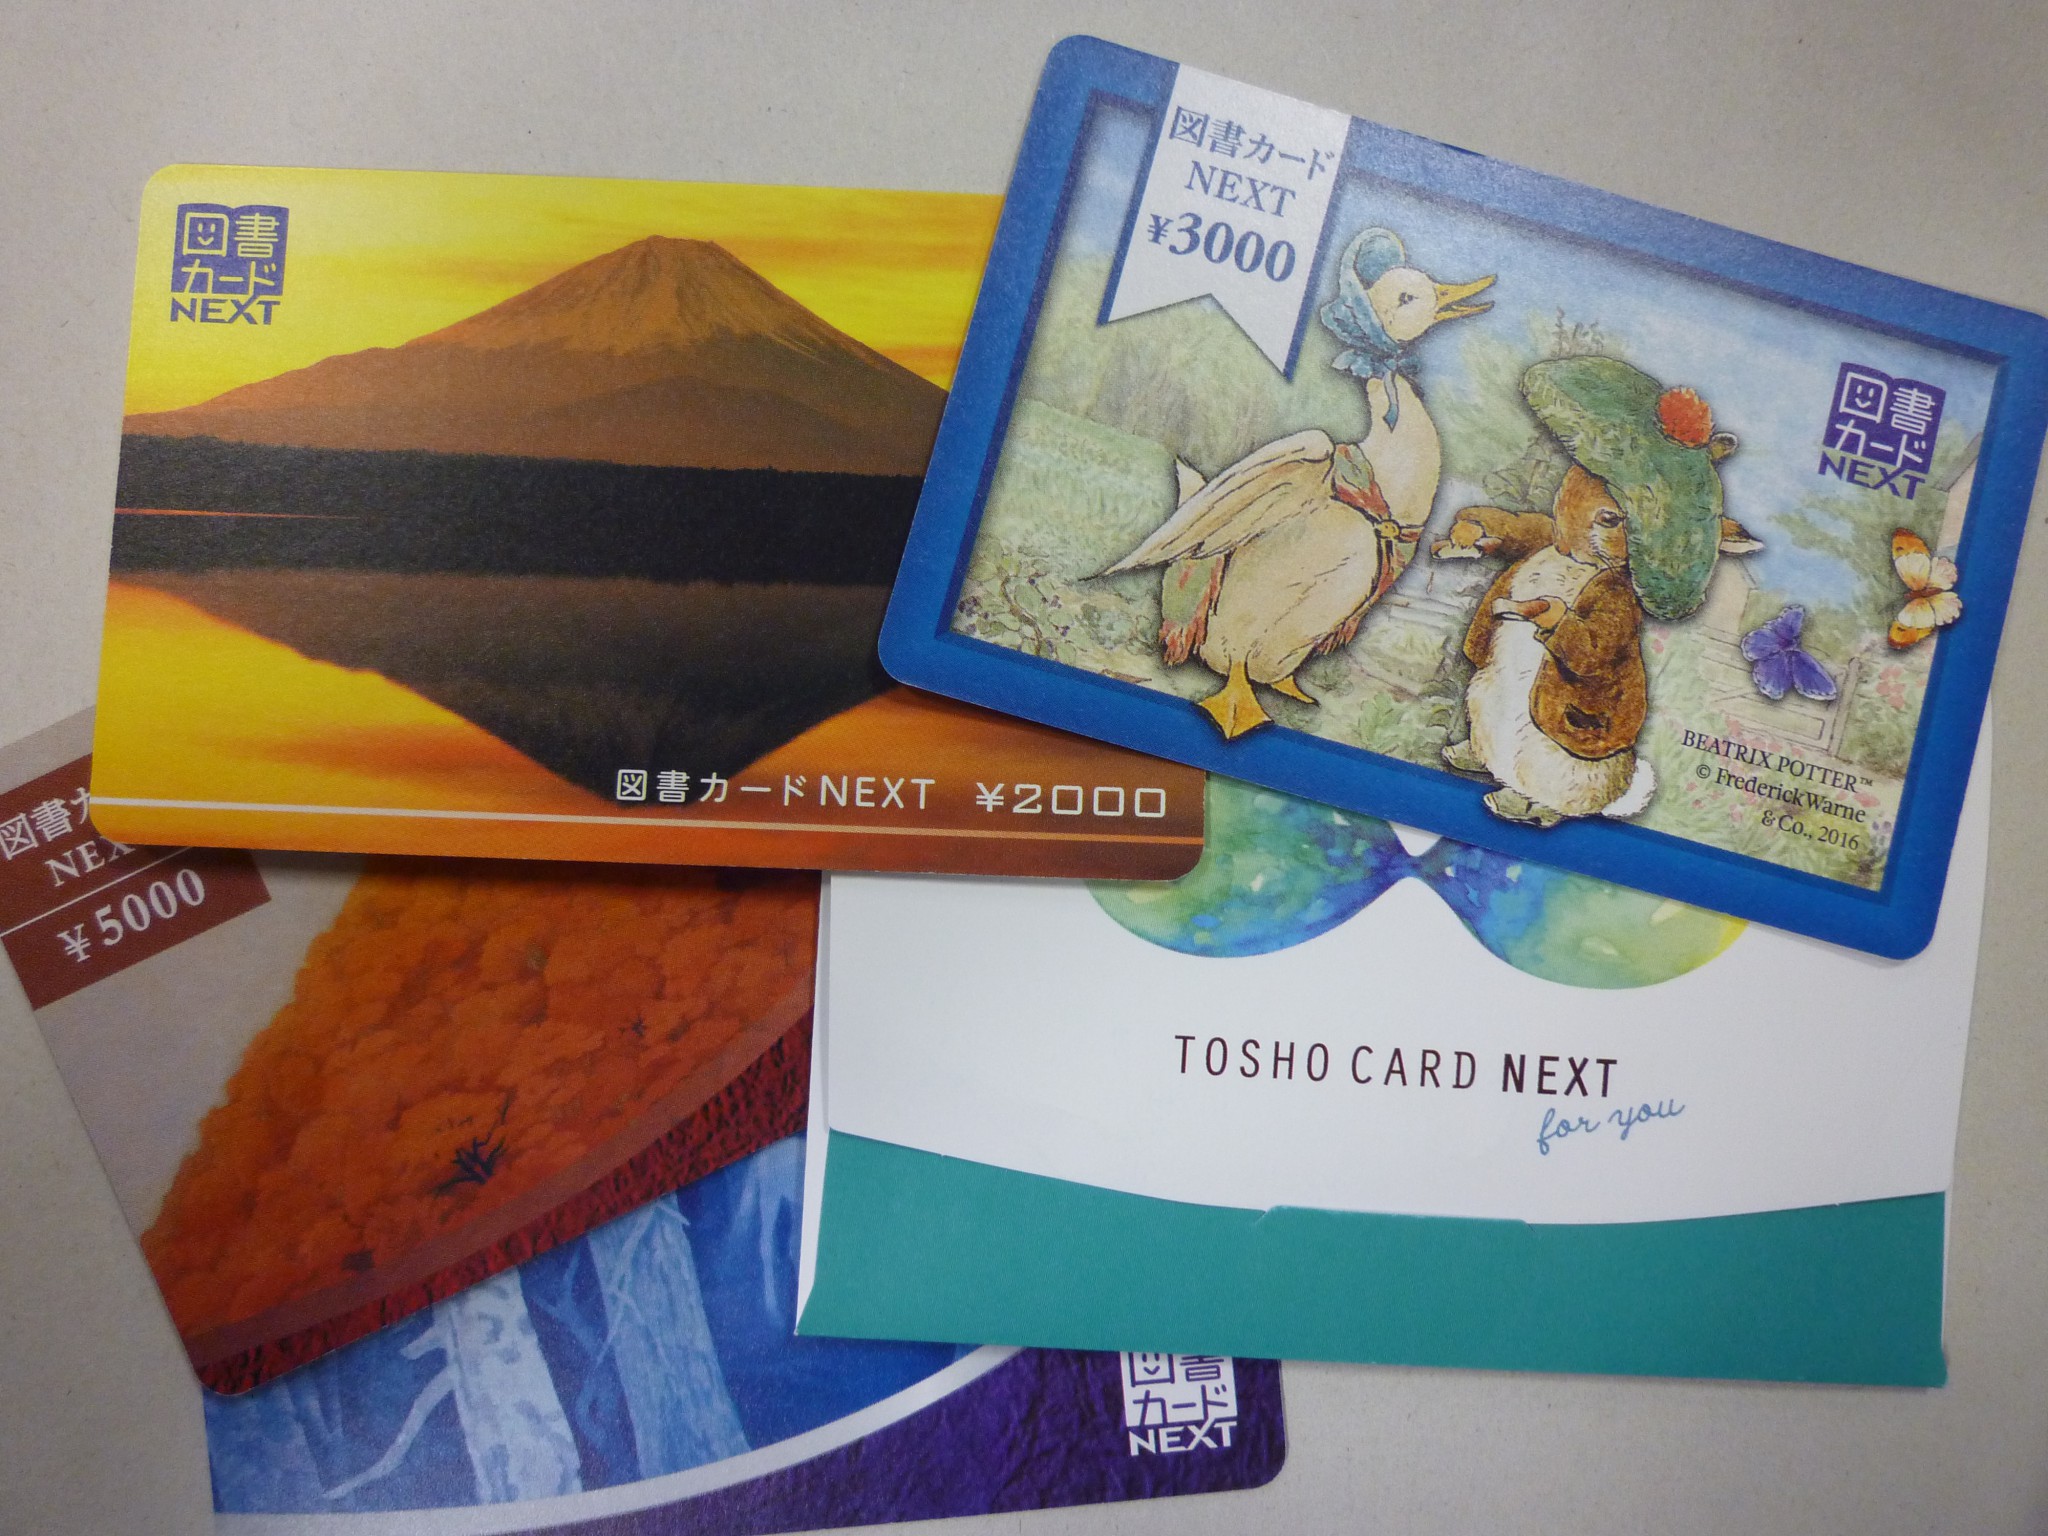 Next 図書 カード 全国共通図書カードが図書カードNEXTにリニューアル!その特徴とは